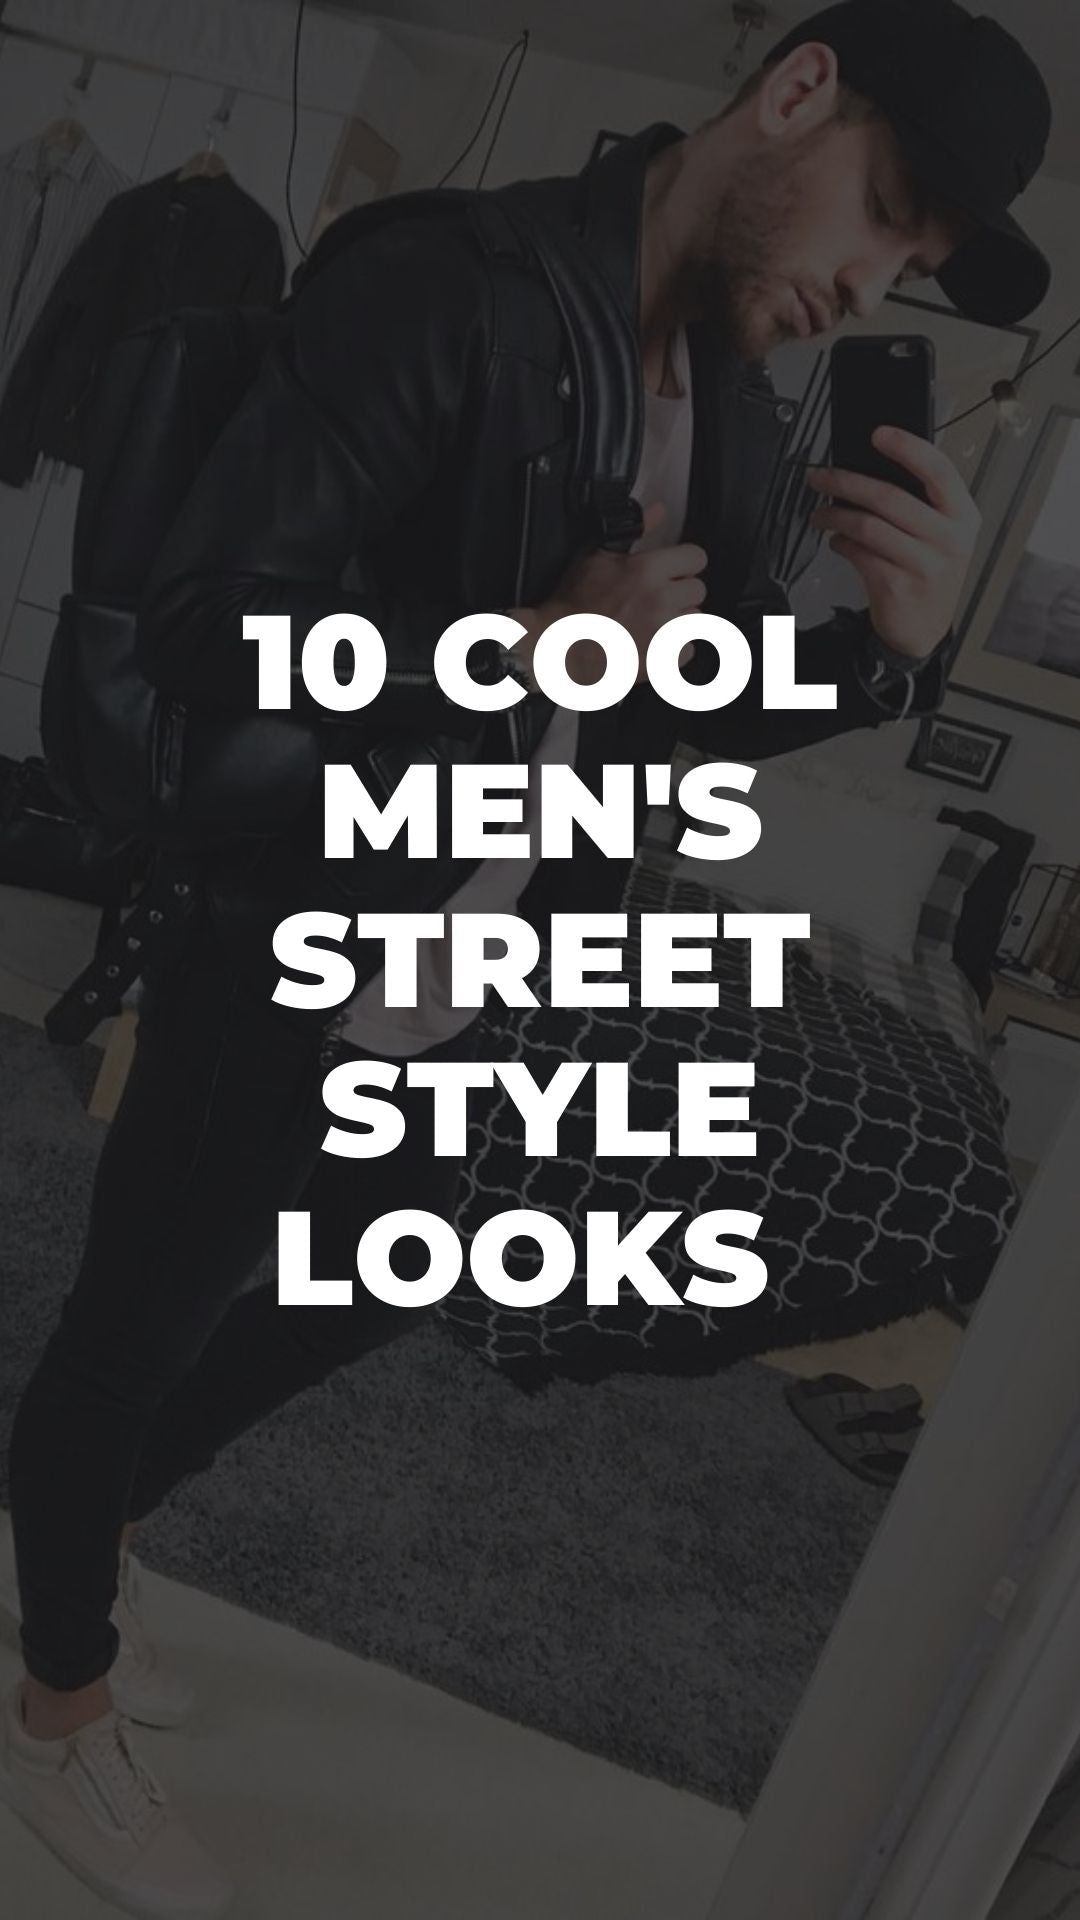 10 cool street style looks for men